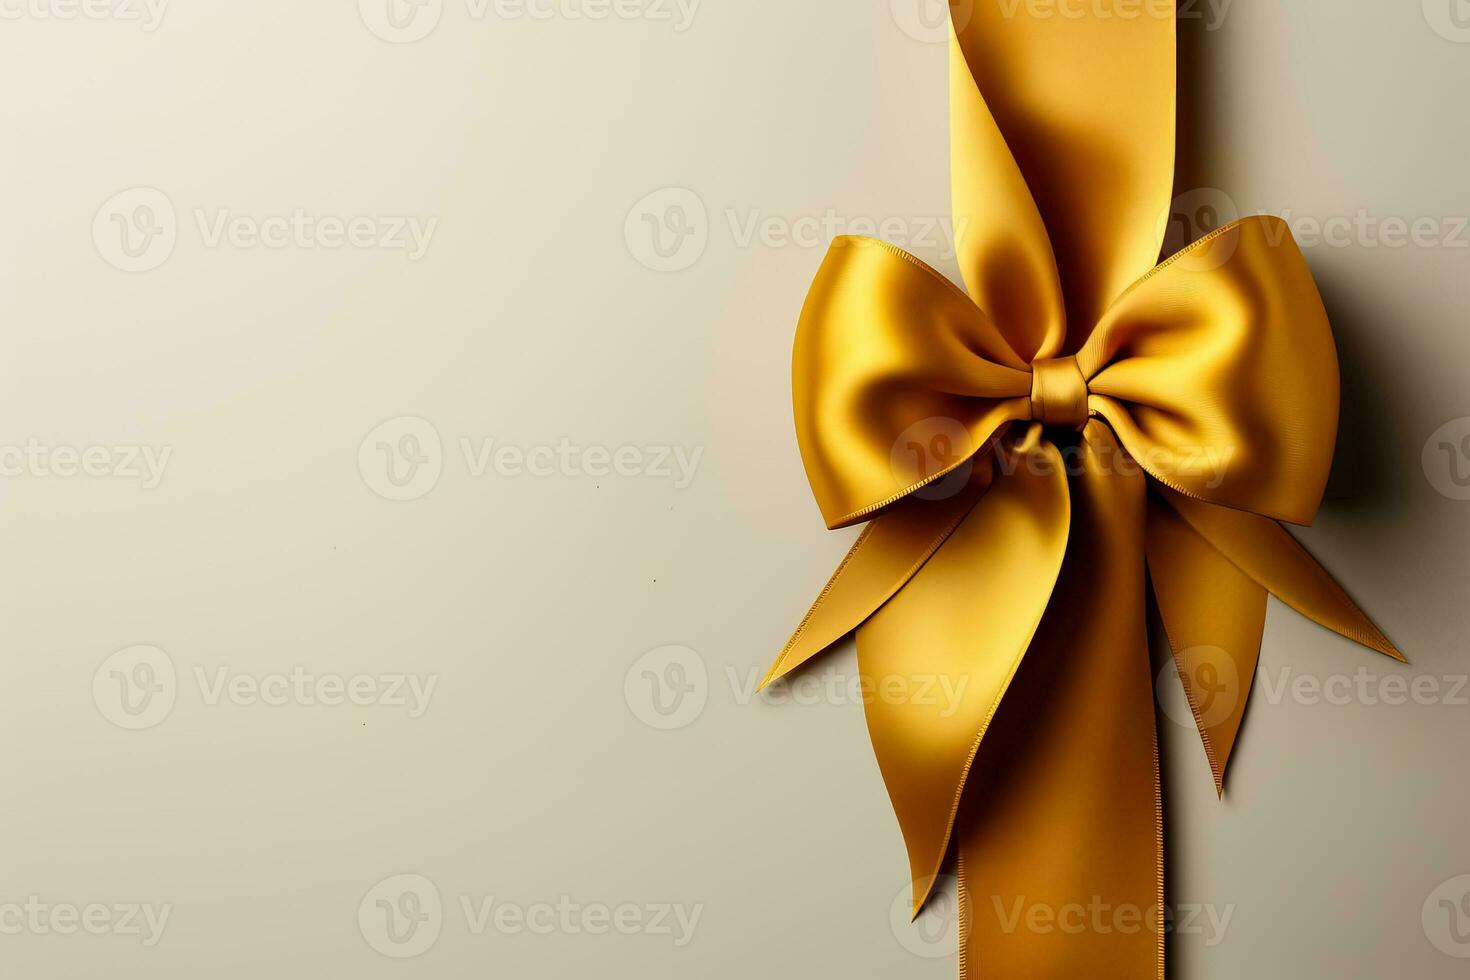 Realistic gold ribbon illustration symbolizing childhood cancer awareness on September's poster template photo